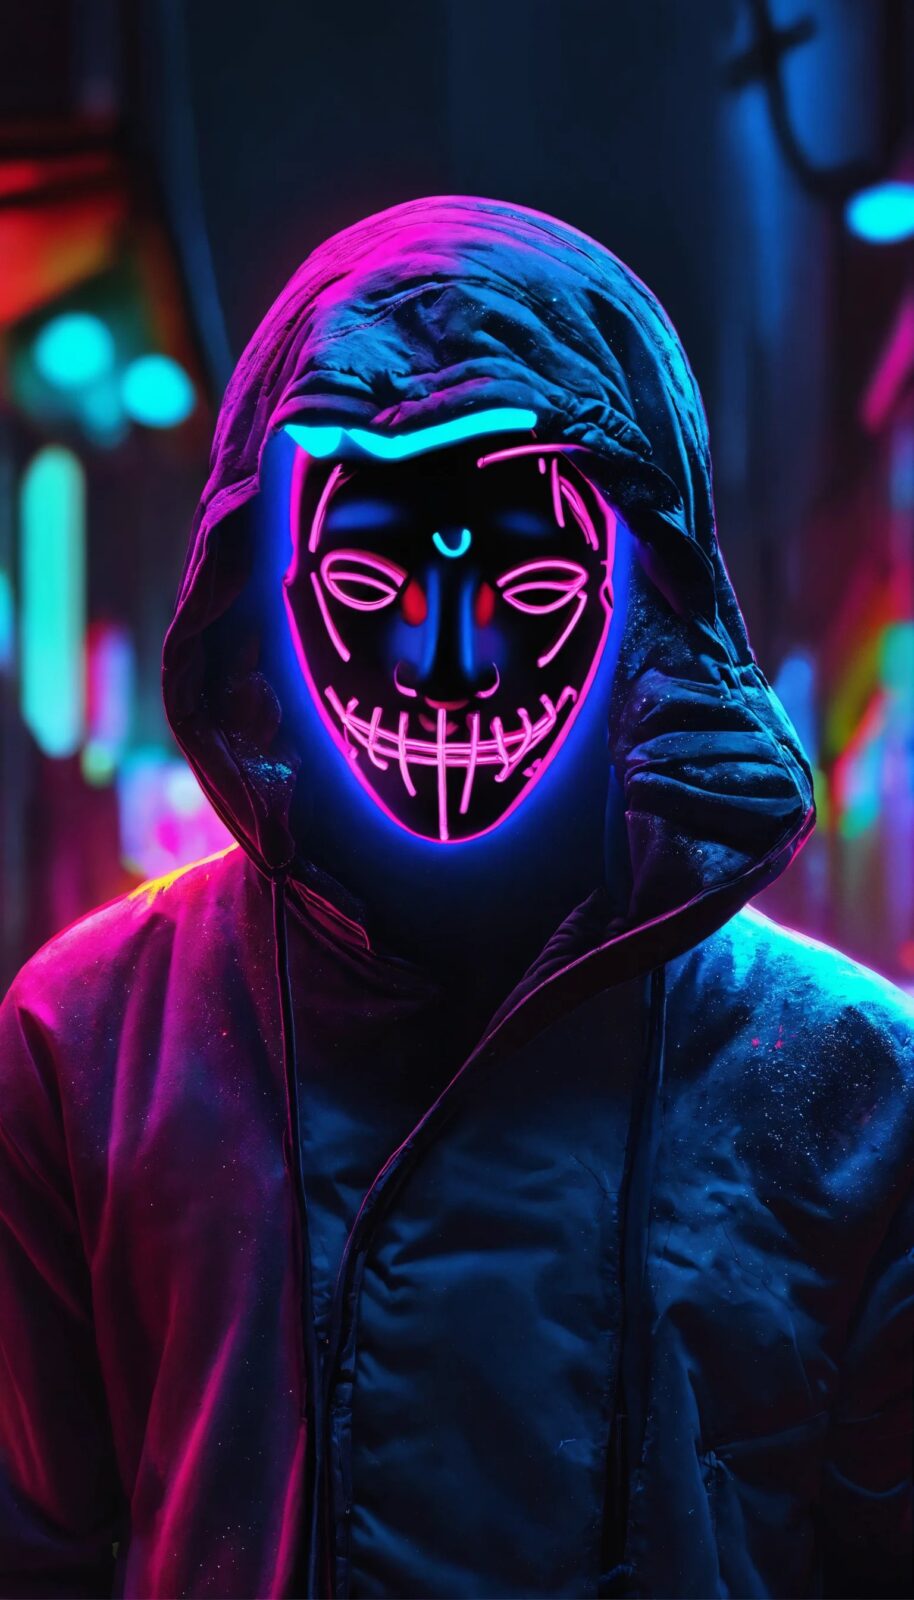 Neon Mask Hoodie iPhone Wallpaper 4K | Free Download